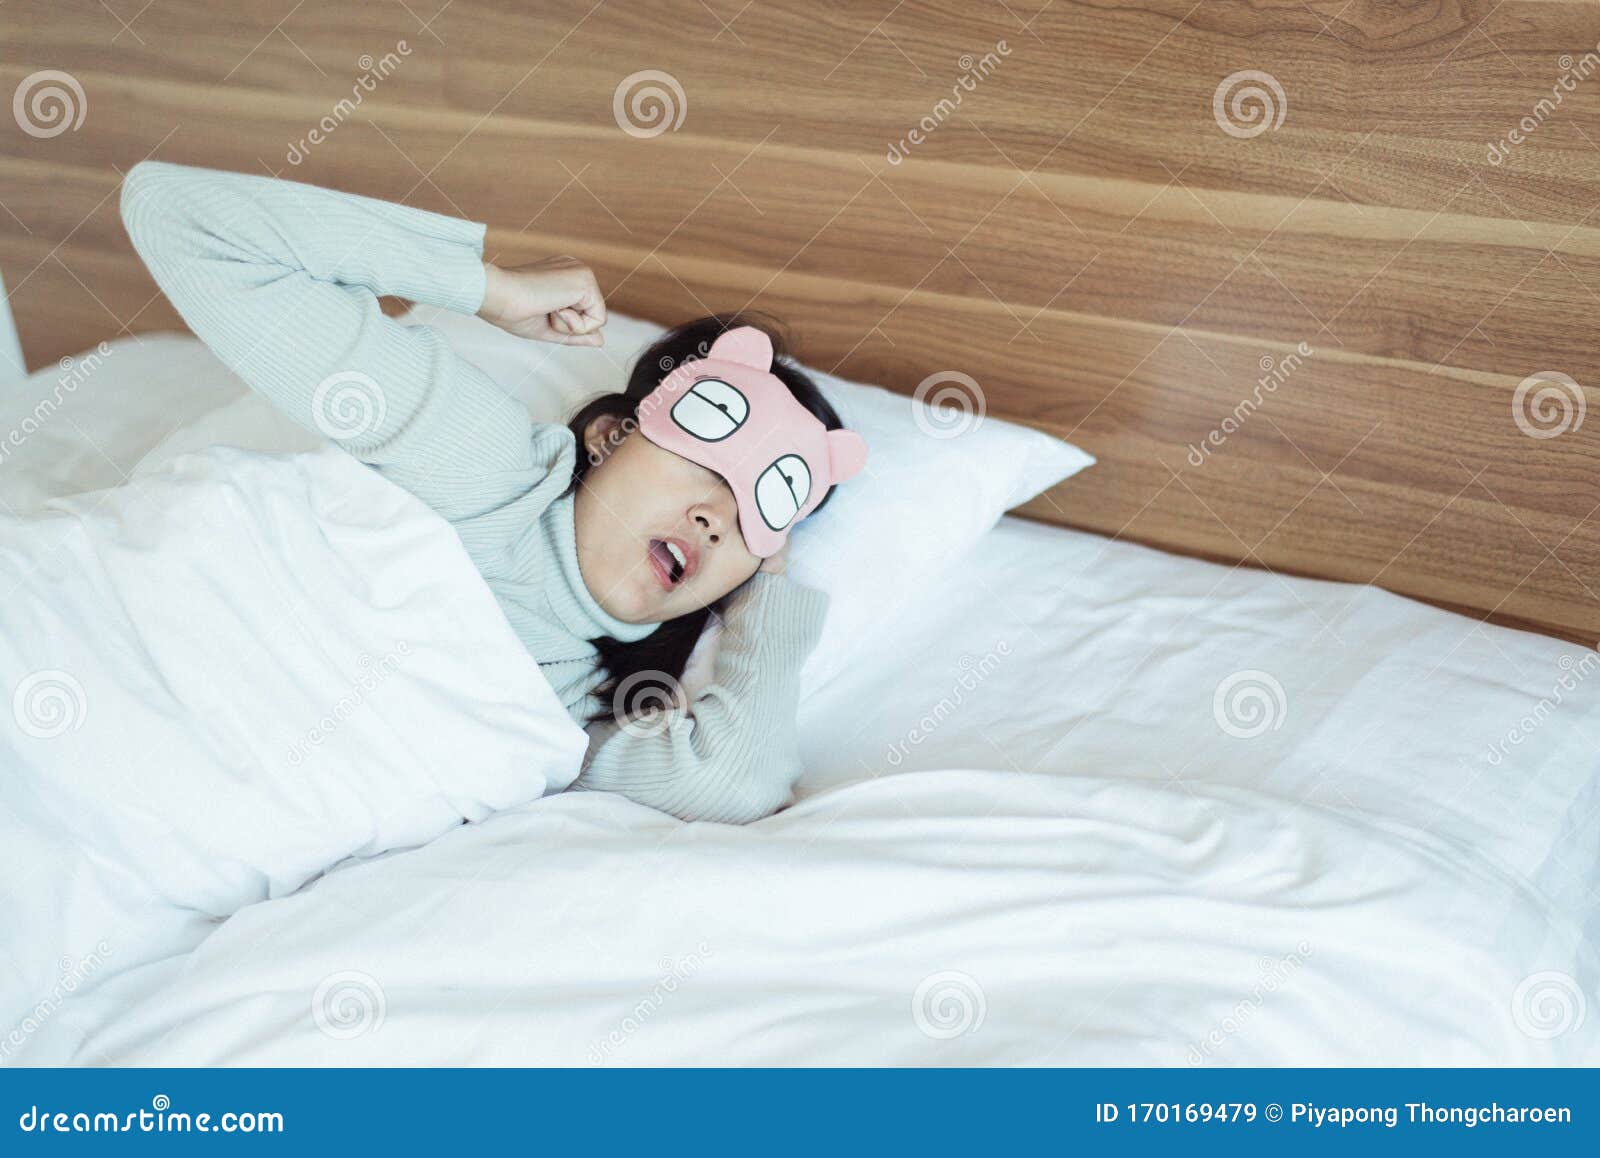 woman yawning on her bedroom and tired sleepy,symptoms and sleepiness